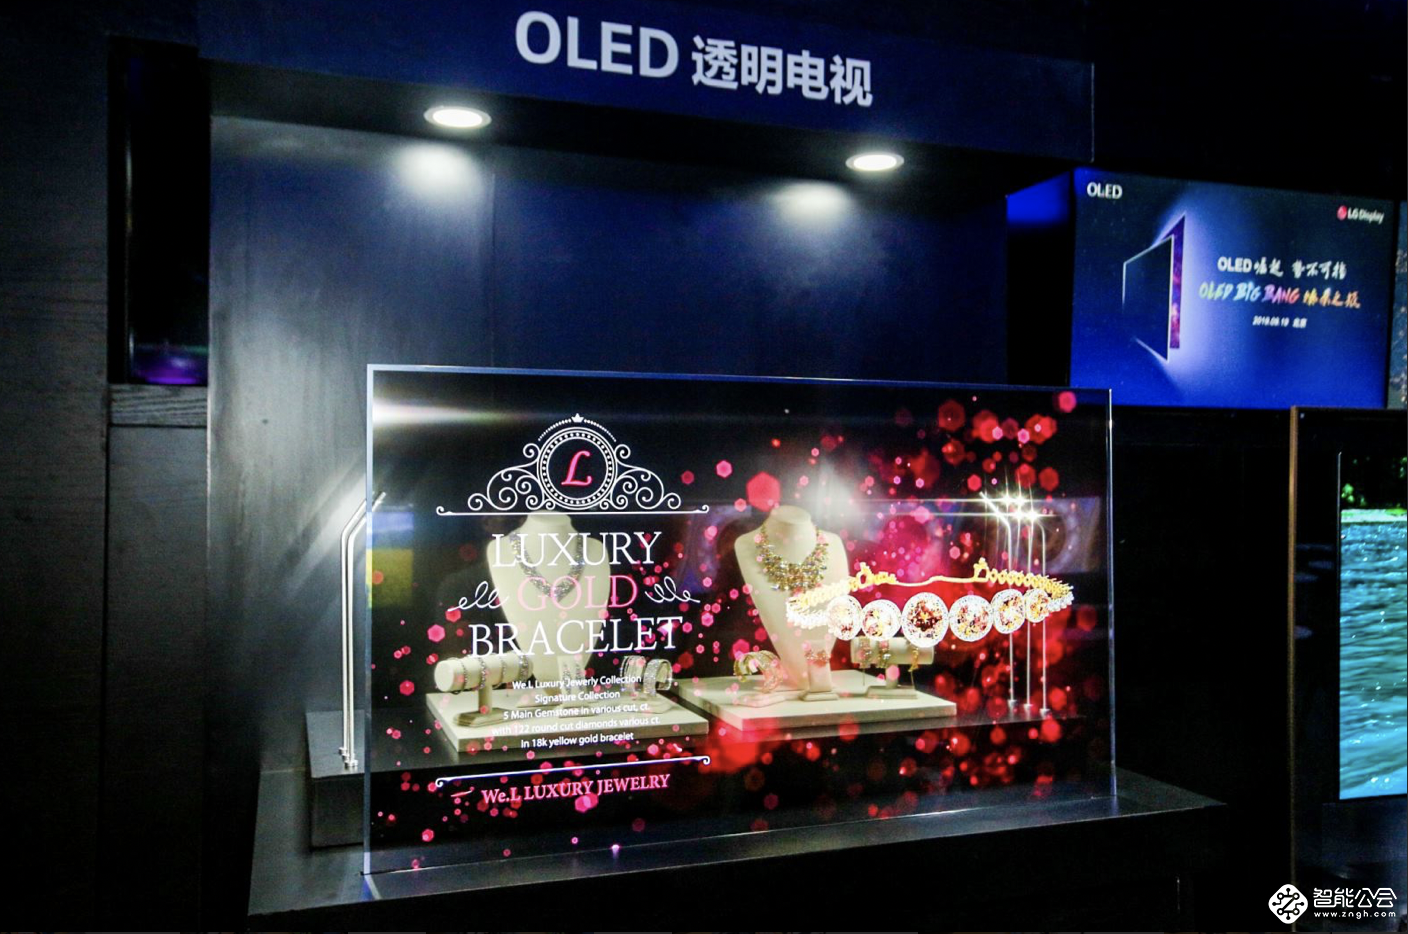 LG Display坚定市场信心 OLED取代液晶是历史发展之必然 智能公会